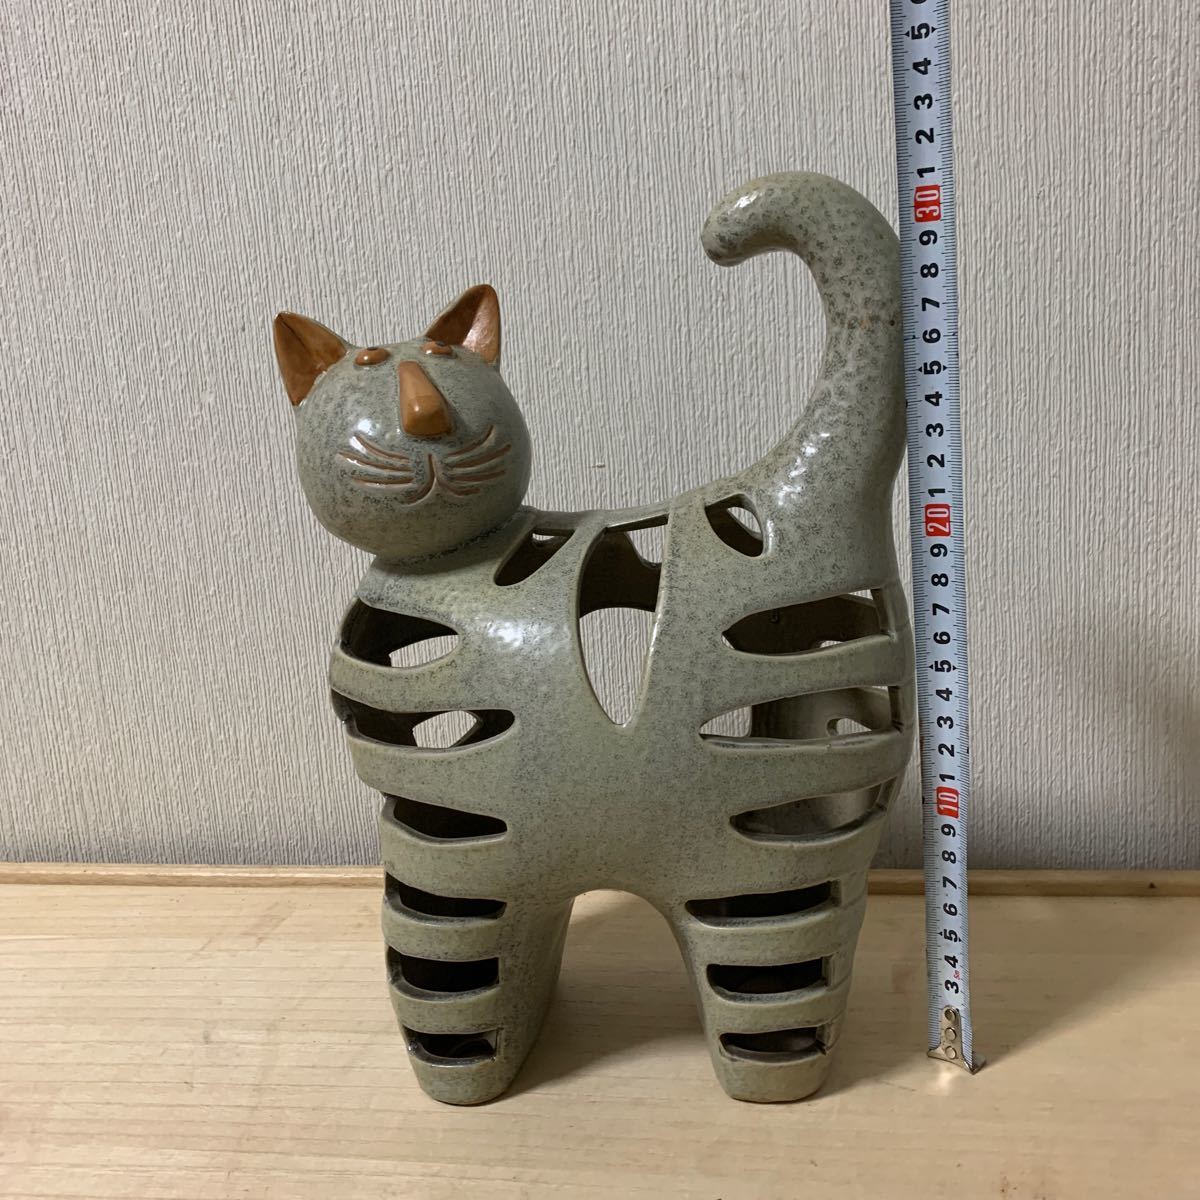  censer cat censer handmade goods unused storage goods height approximately 31.5cm ceramics 